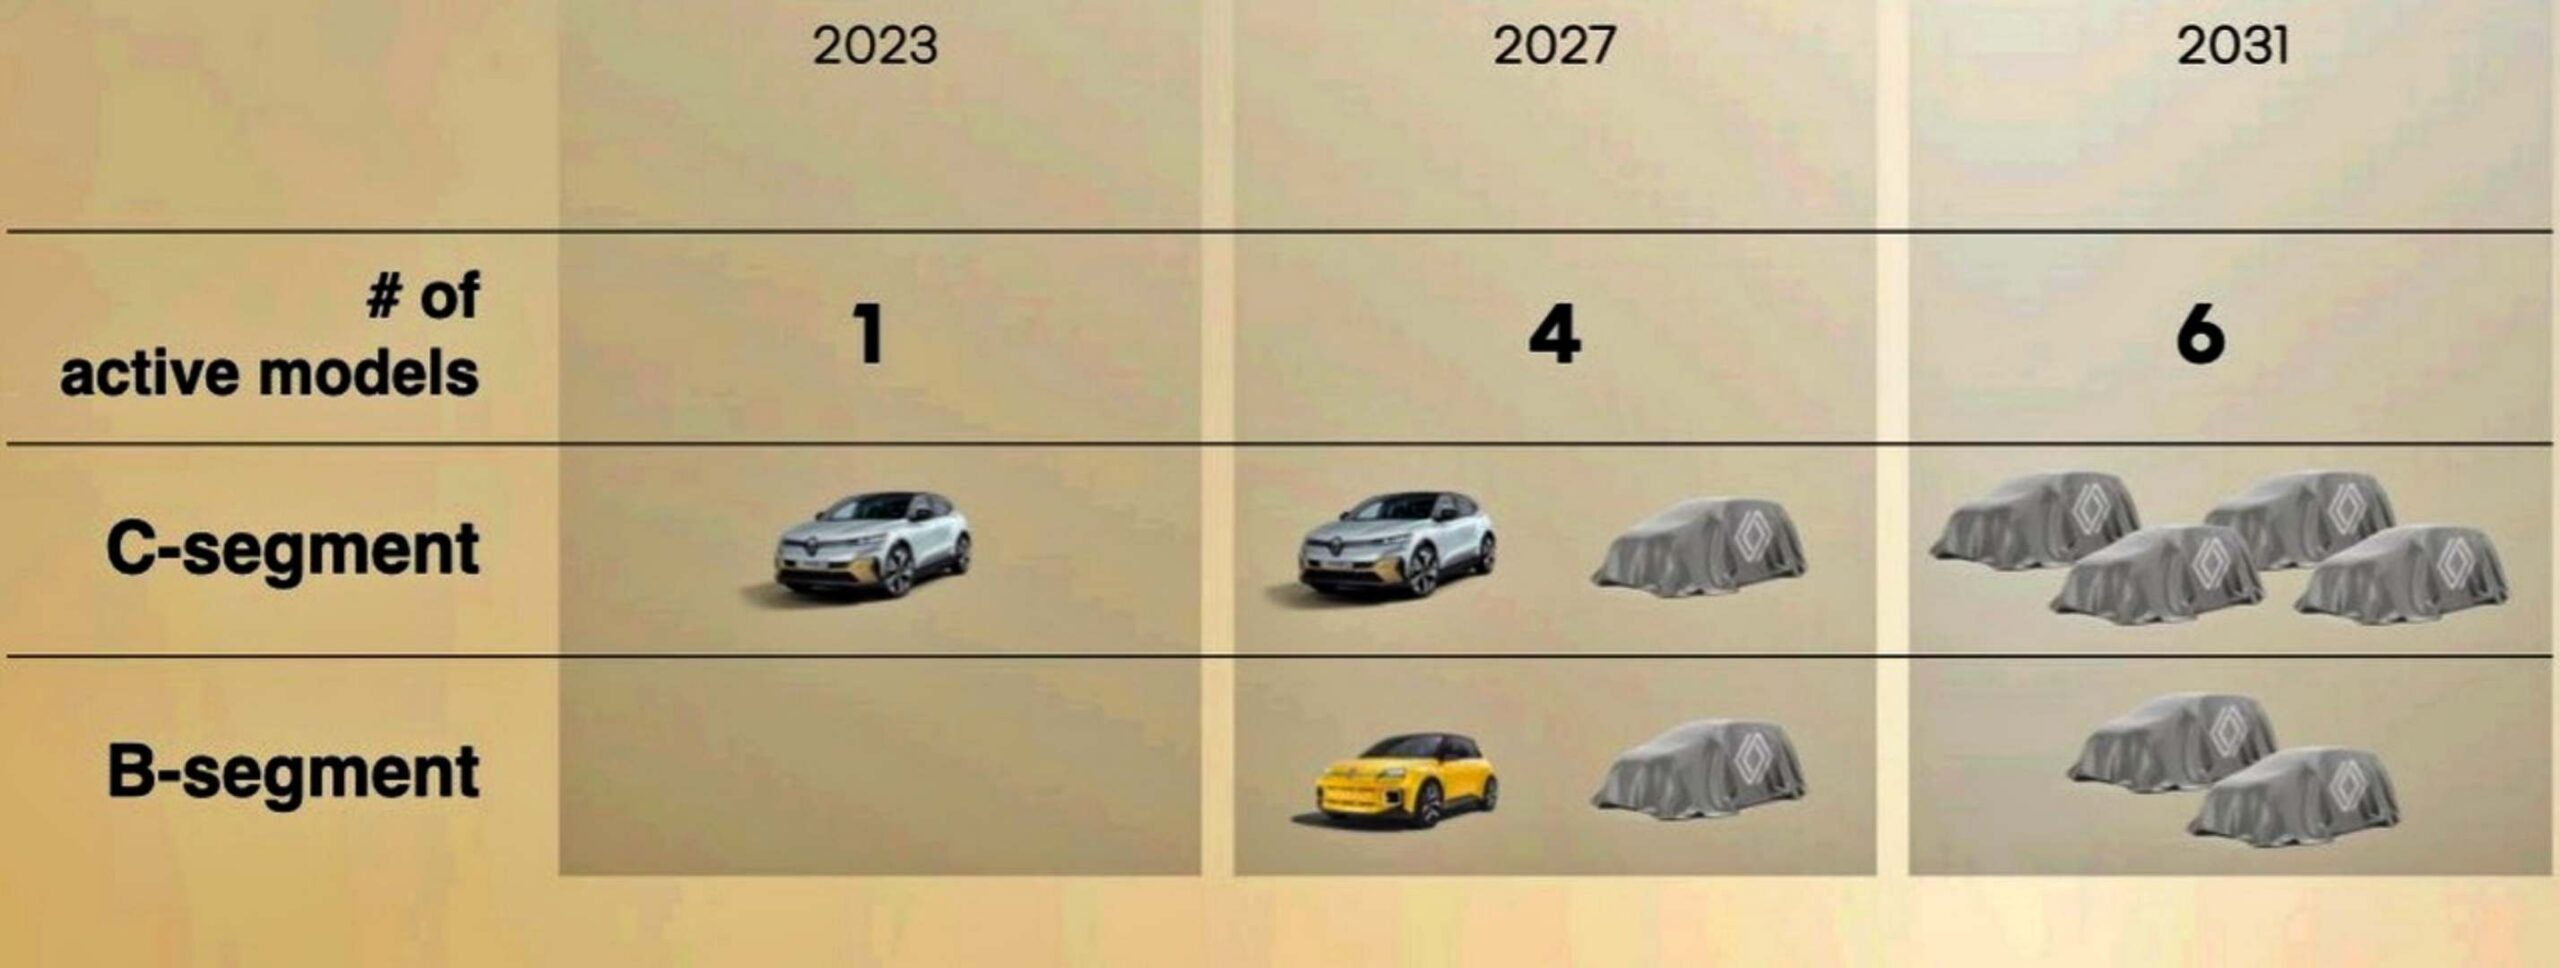 Renault Product Plan